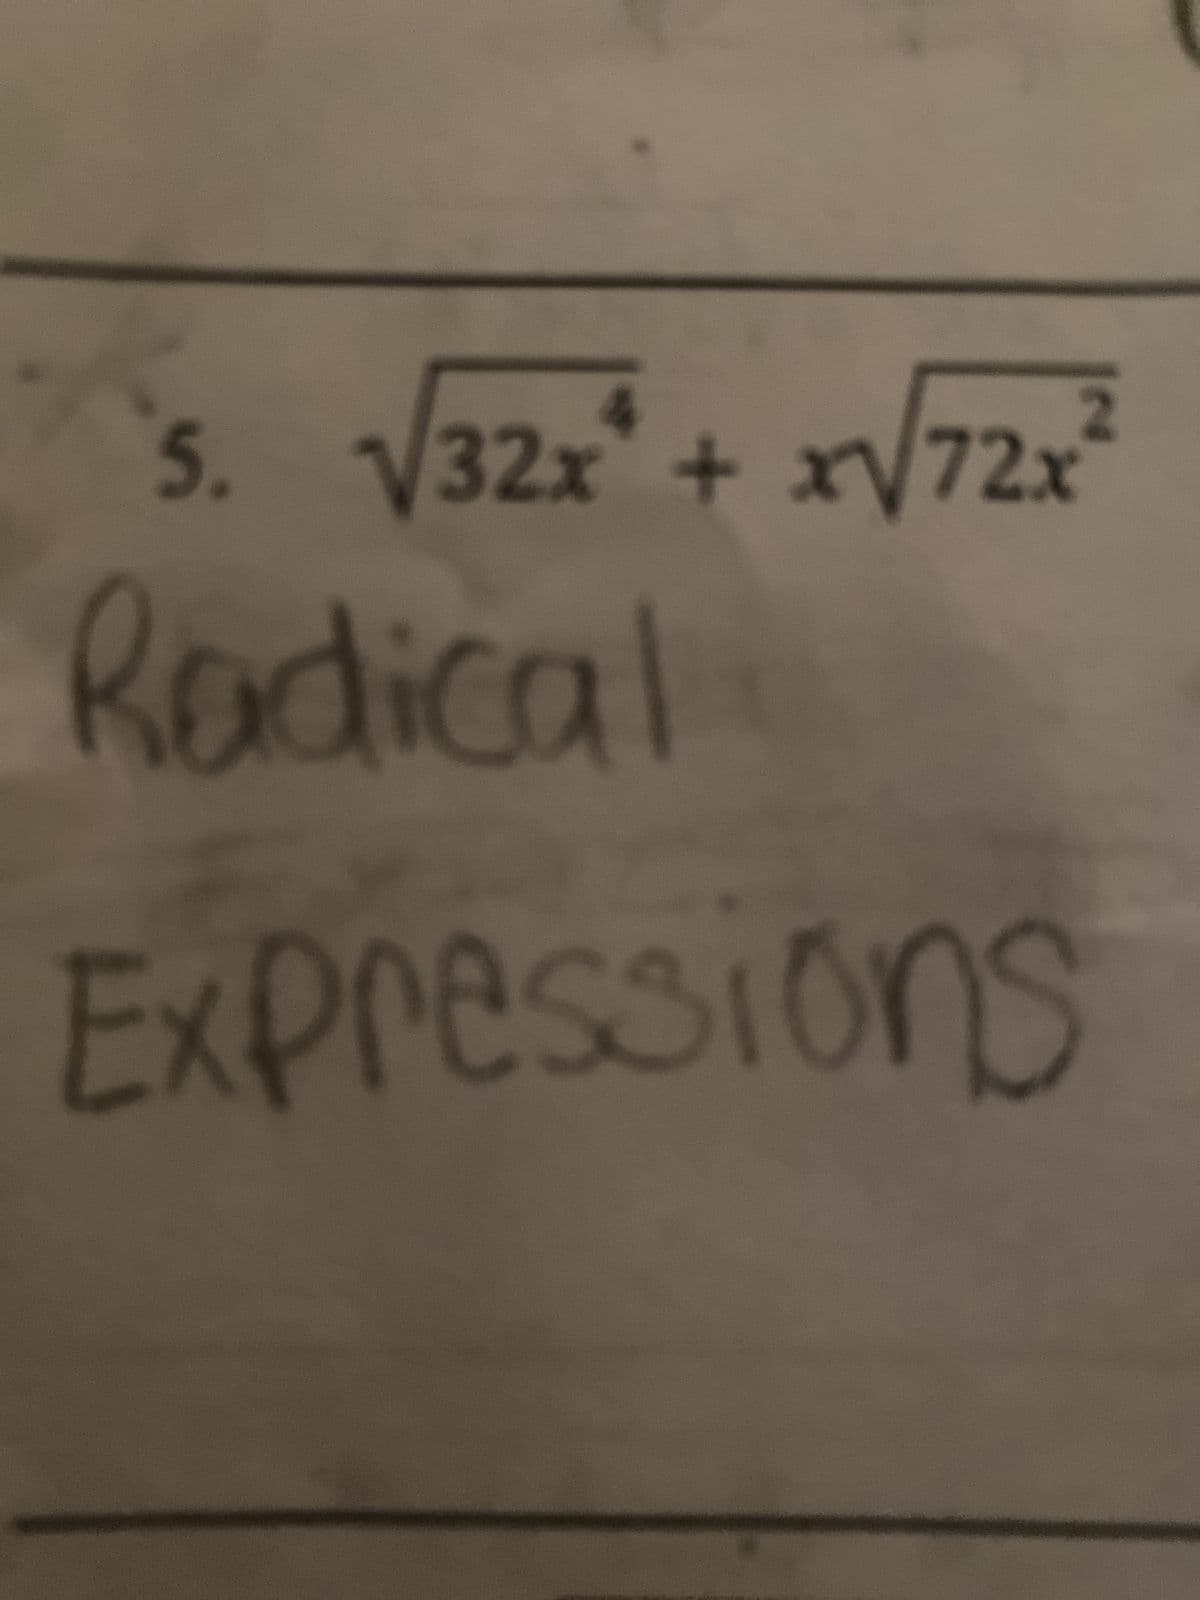 5.
4
√√32x² + x√√72x²
Radical
Expressions